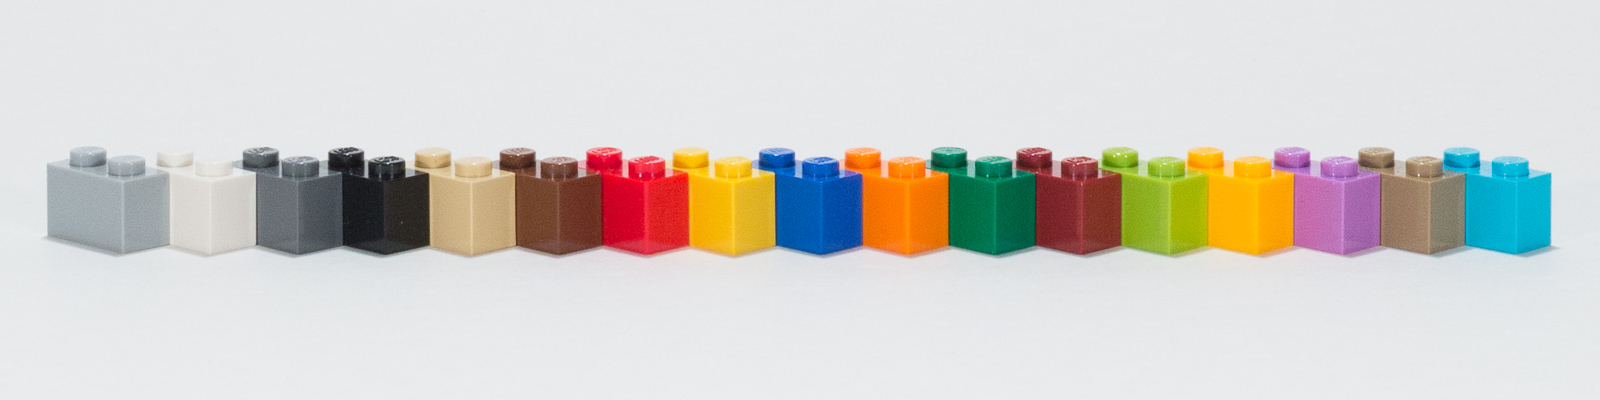 55 Bulk Lego Bricks Lot Friends / Girl / Pastel Colors pink, Azure, Orange,  Lime, Medium Blue 